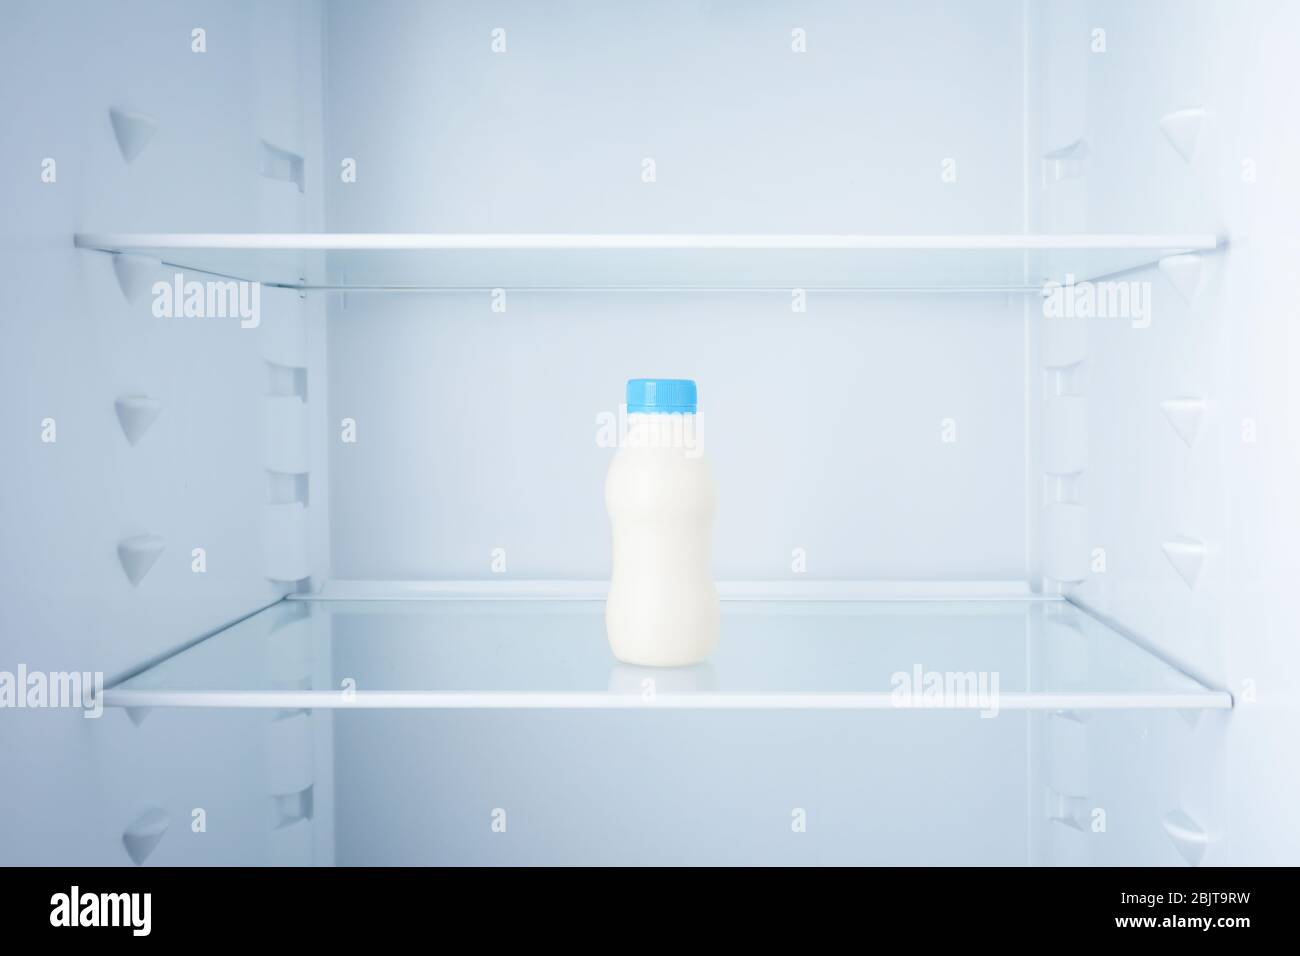 https://c8.alamy.com/comp/2BJT9RW/bottle-of-milk-in-empty-refrigerator-2BJT9RW.jpg